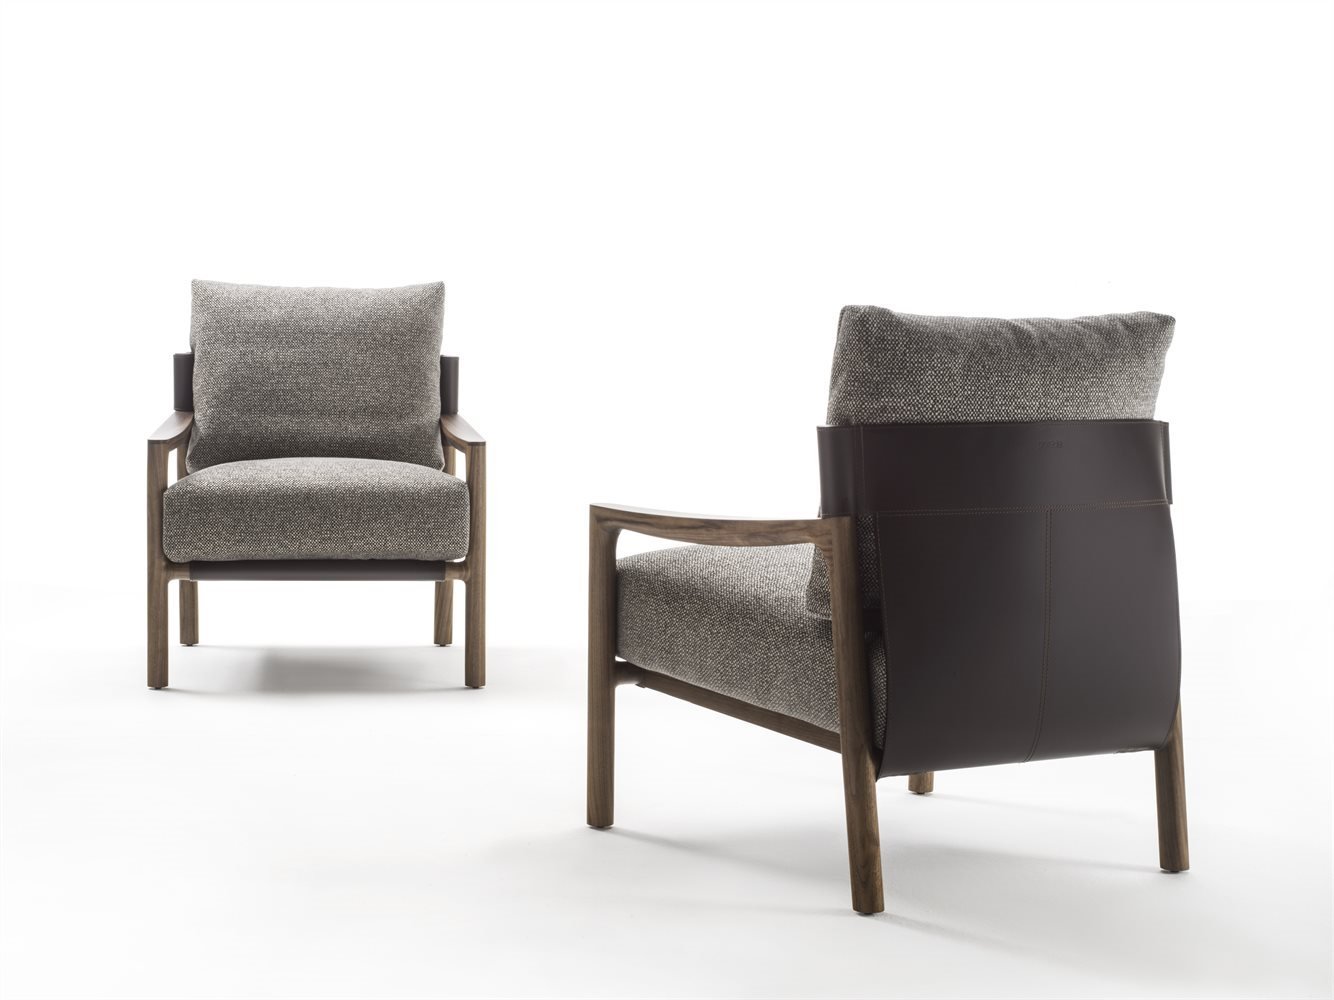 Vera Arm Chair lounge from Porada, designed by Gabriele & Oscar Buratti